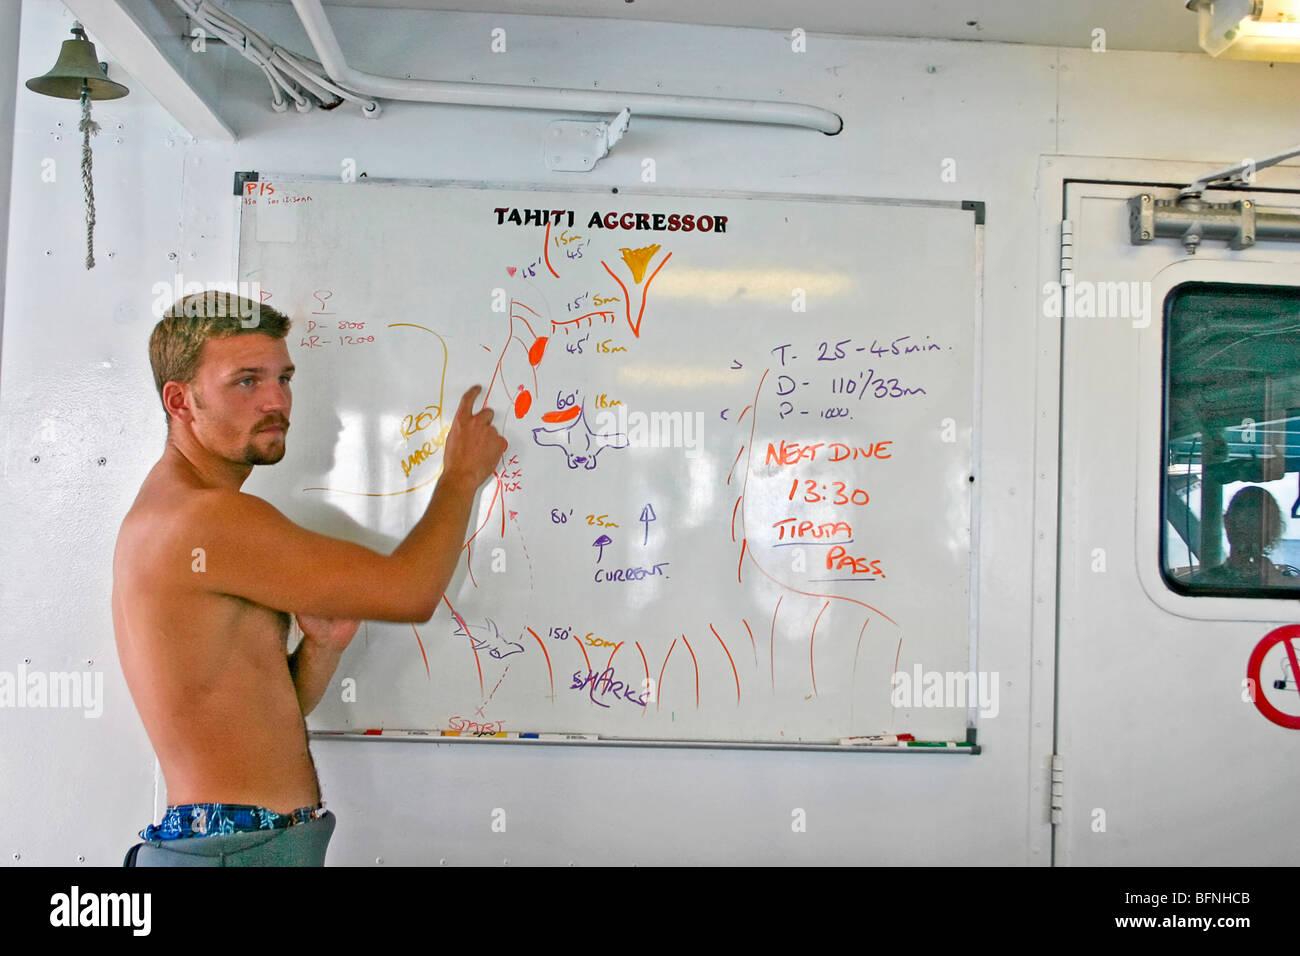 Dive Boot Crewman gibt Tauch-Briefing für Tauchen Pass von Tahiti Atoll Tahiti Aggressor Stockfoto